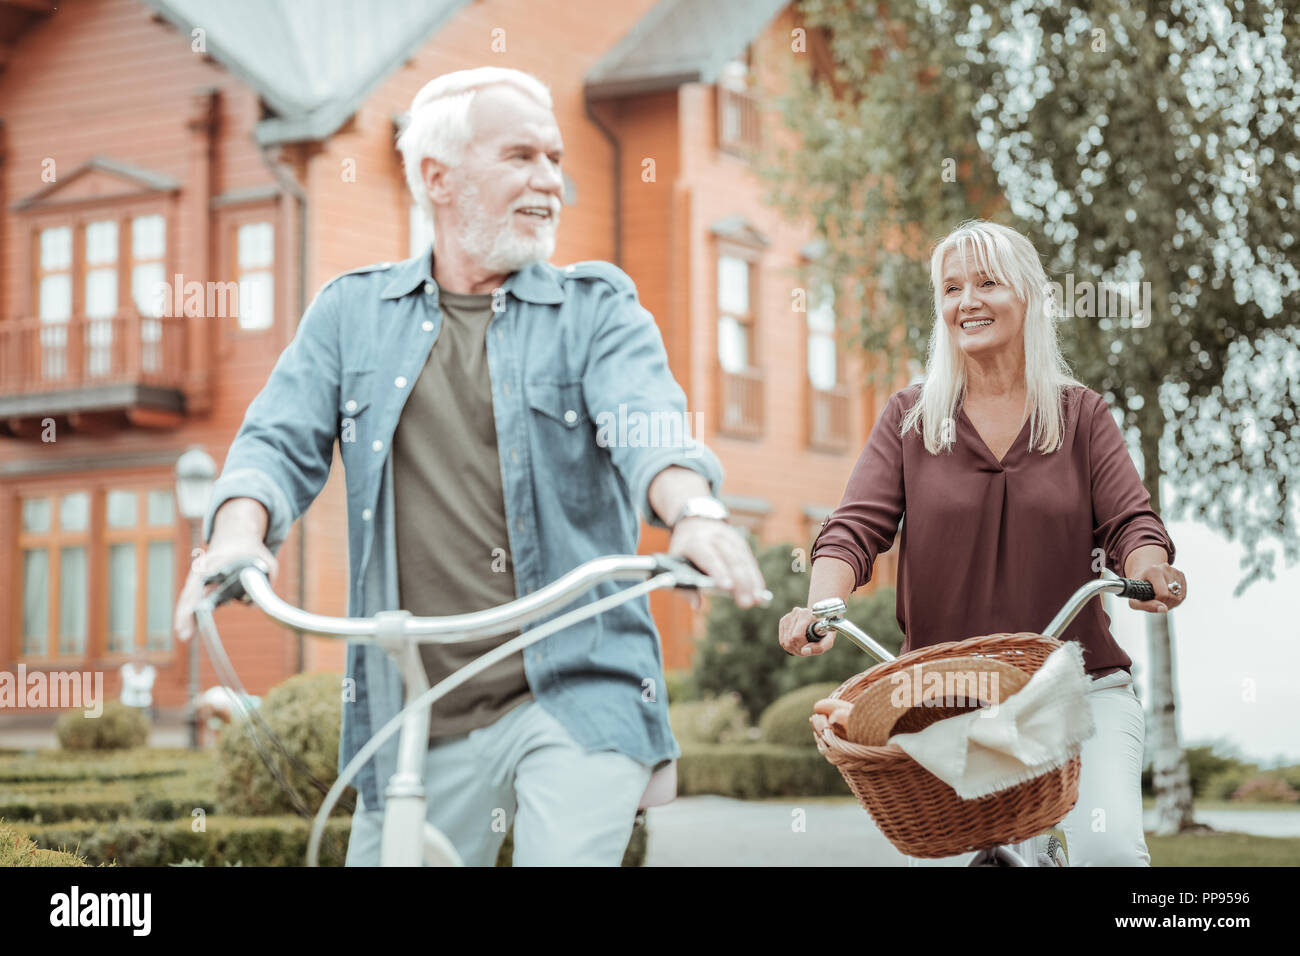 Cheerful senior people enjoying the nature on bikes Stock Photo